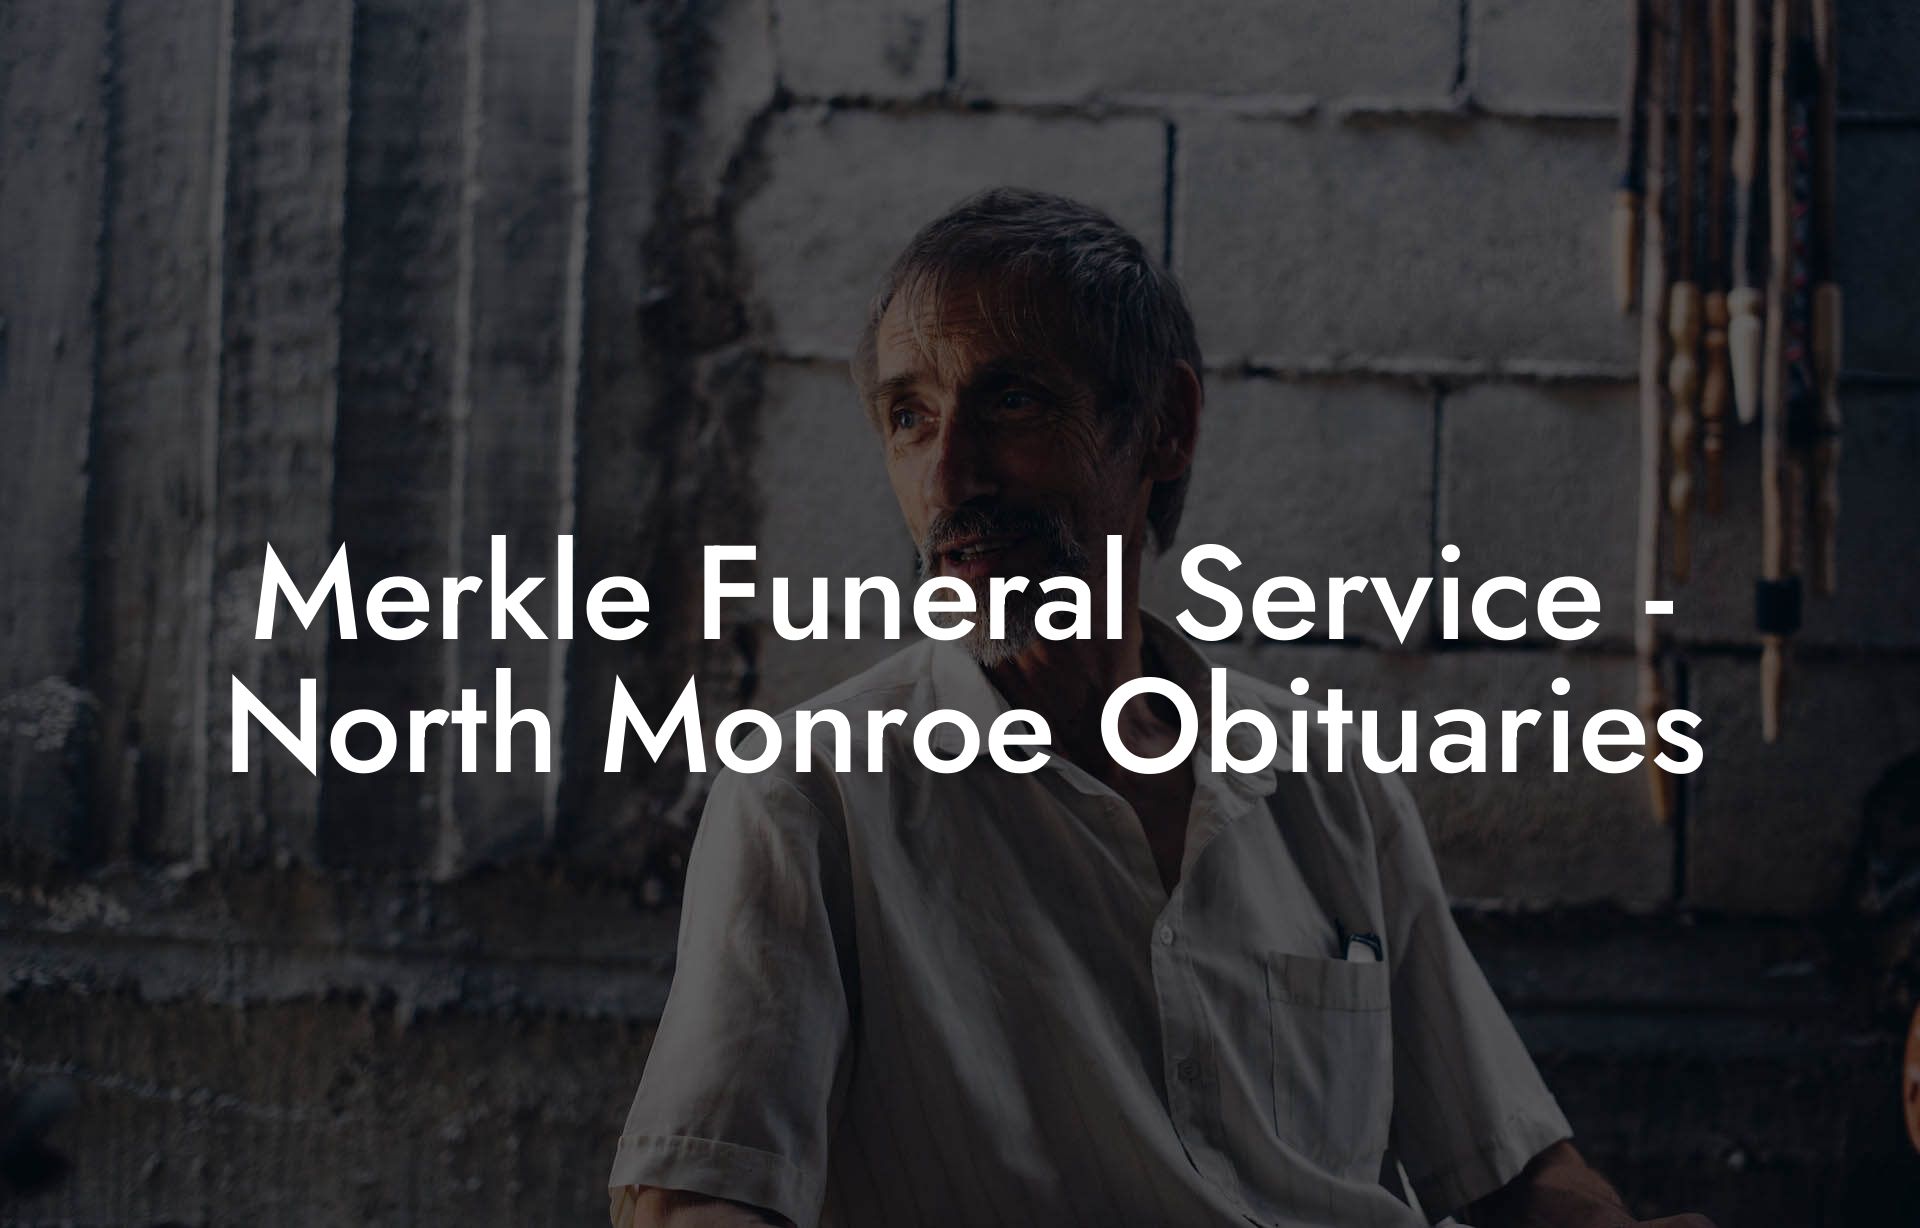 Merkle Funeral Service - North Monroe Obituaries